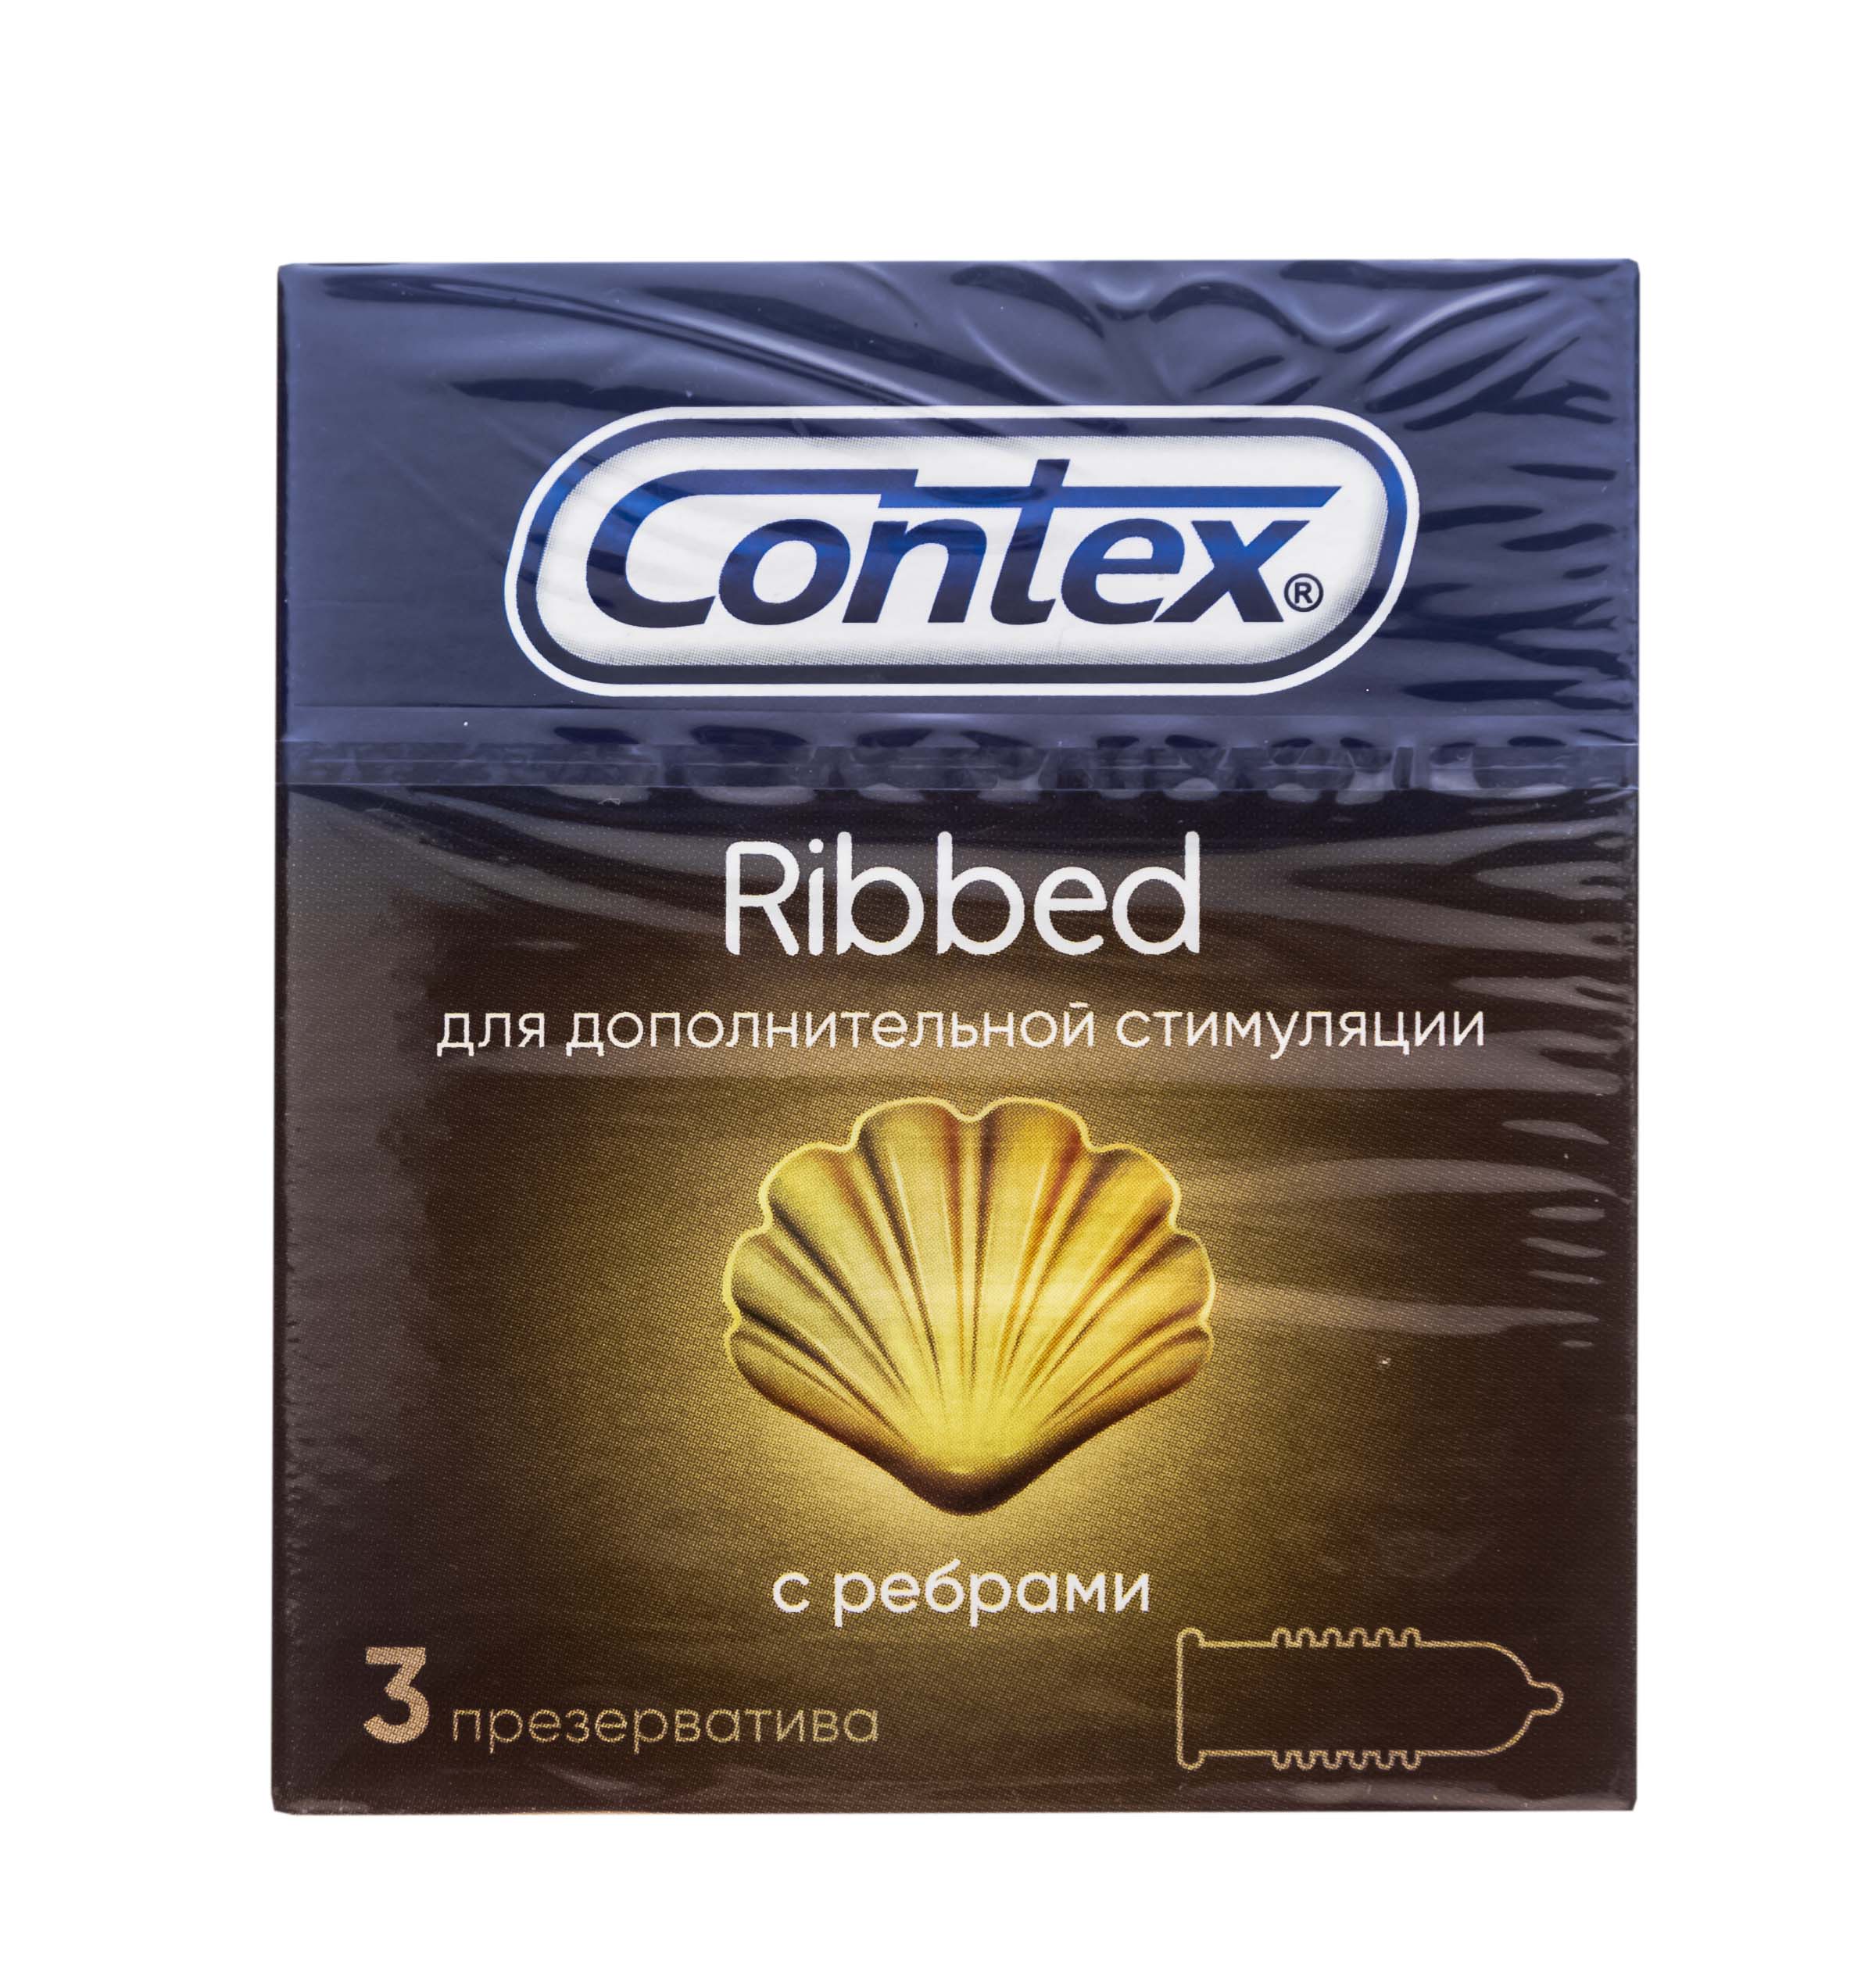 Contex Презервативы Ribbed ребристые, №3 (Contex, Презервативы) презервативы duett ribbed ребристые 3 штуки